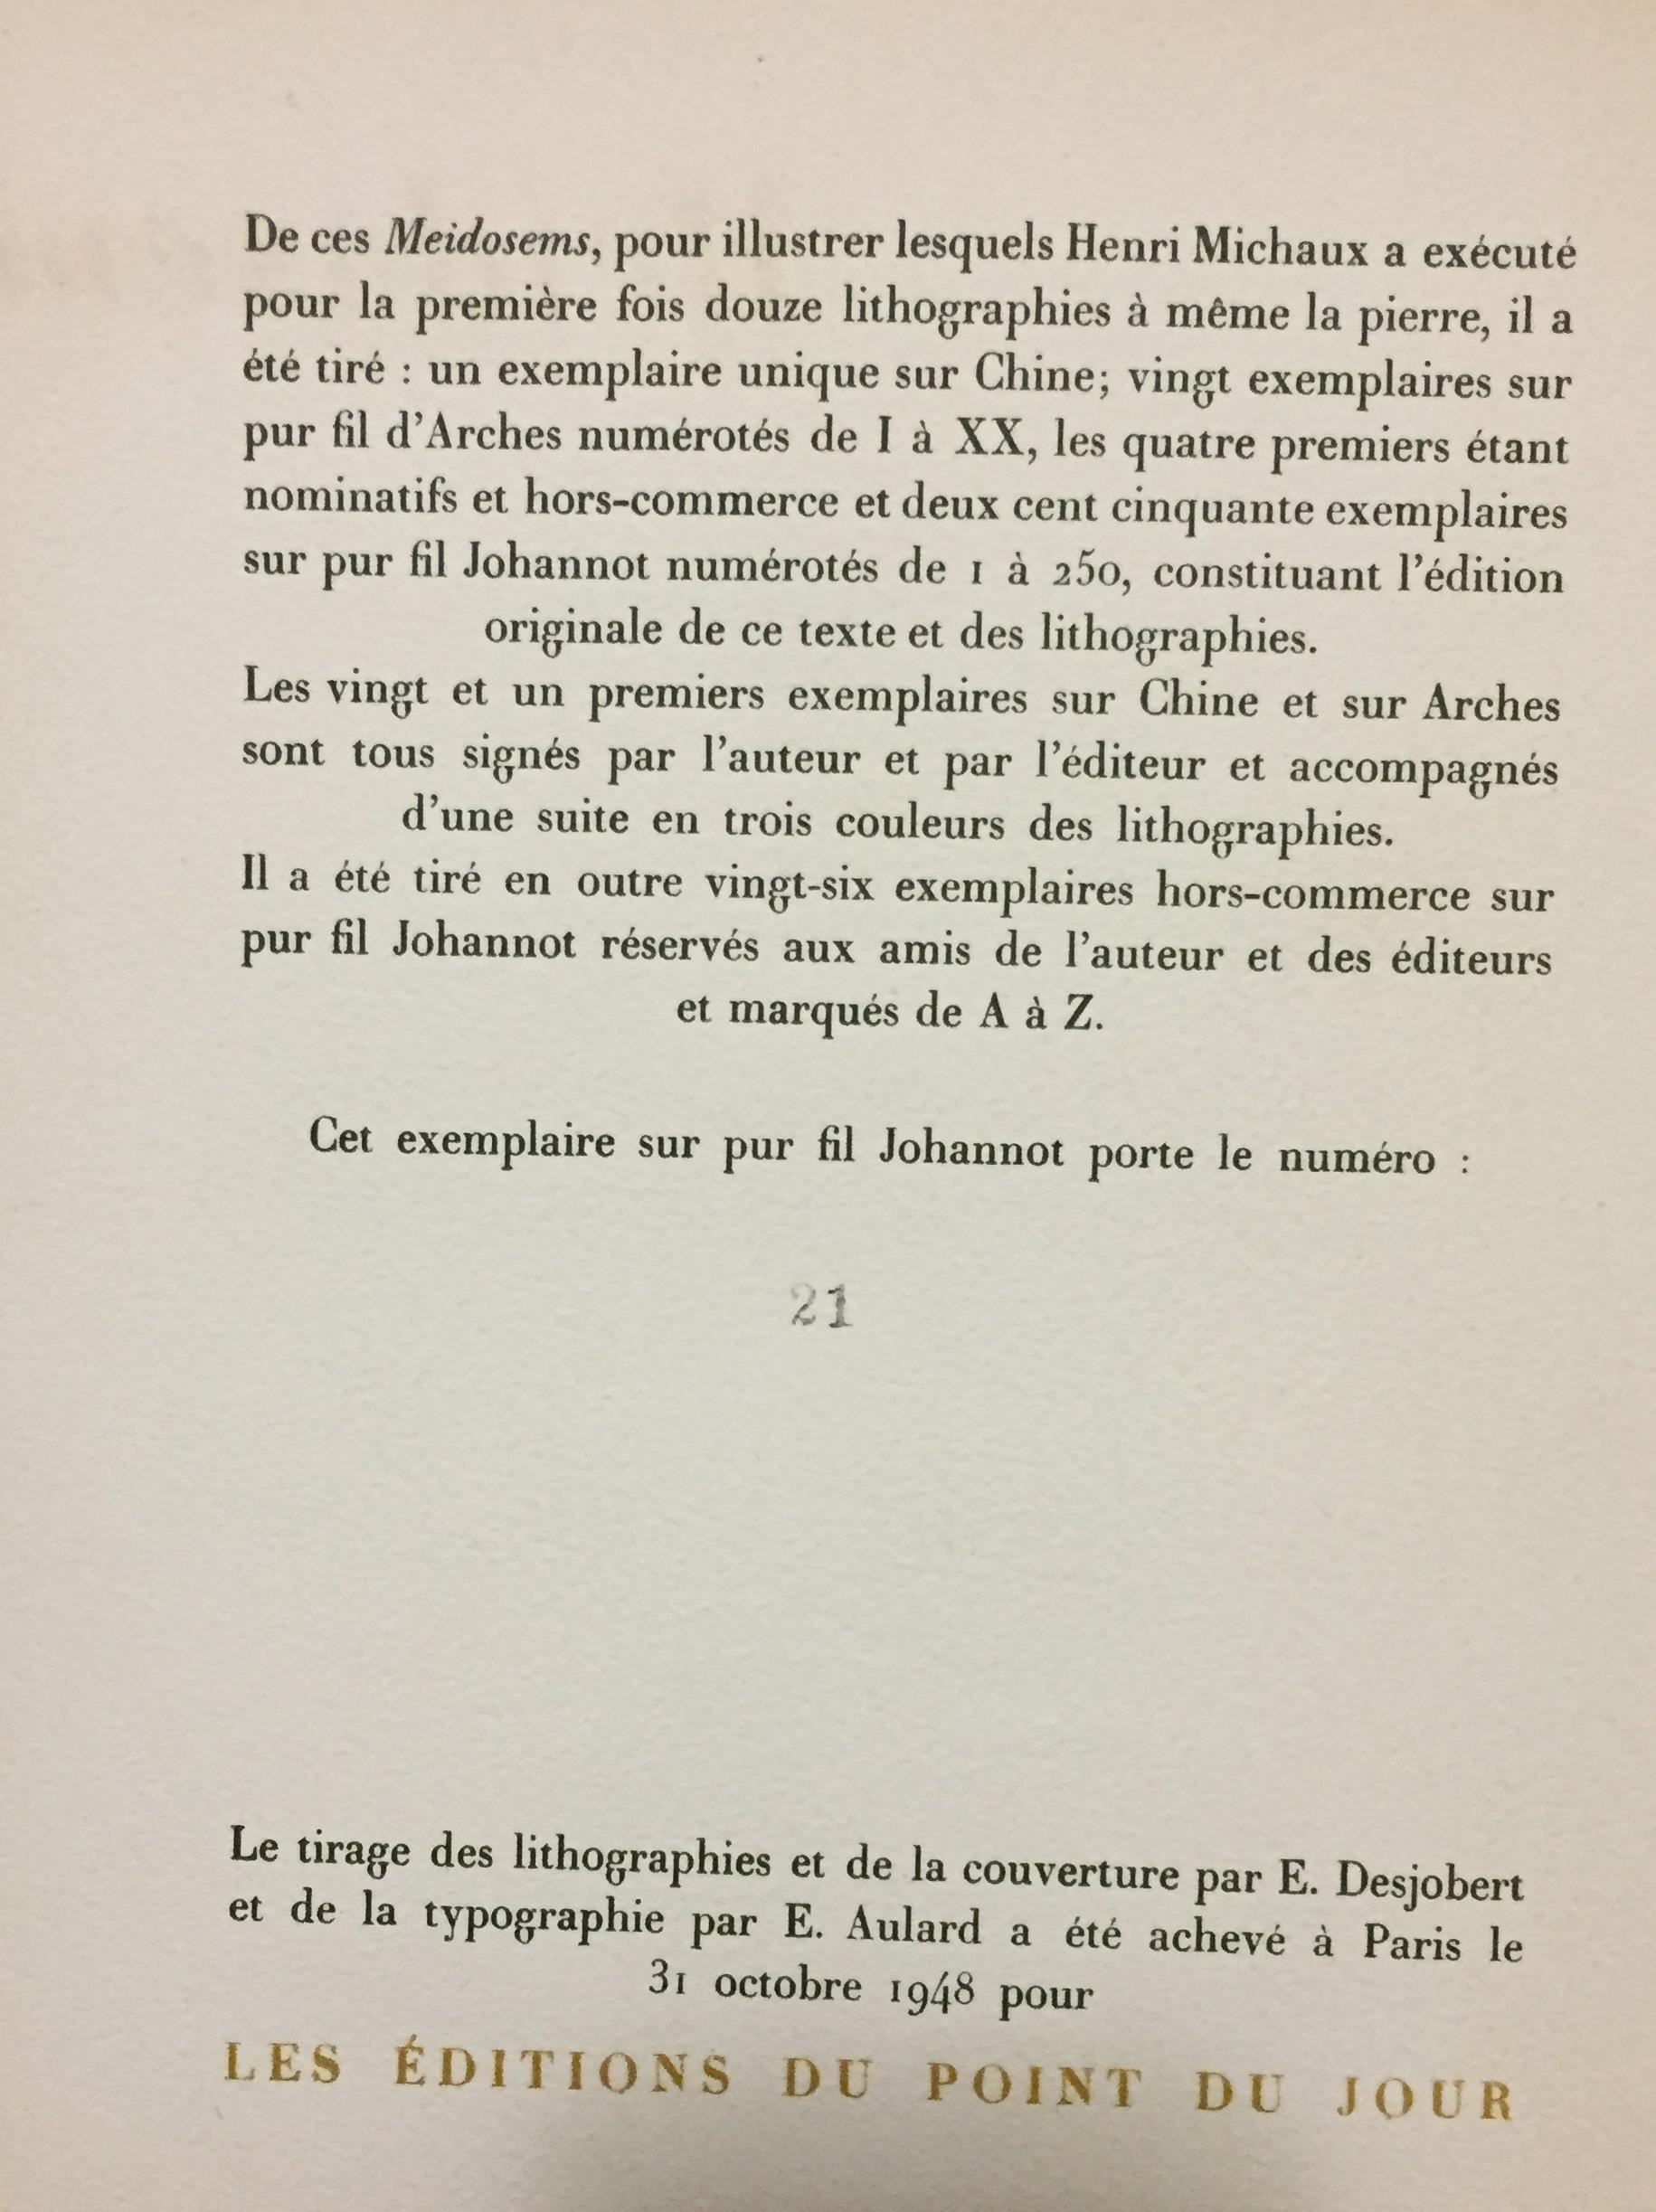 Meidoseme (Moderne), Print, von Henri Michaux